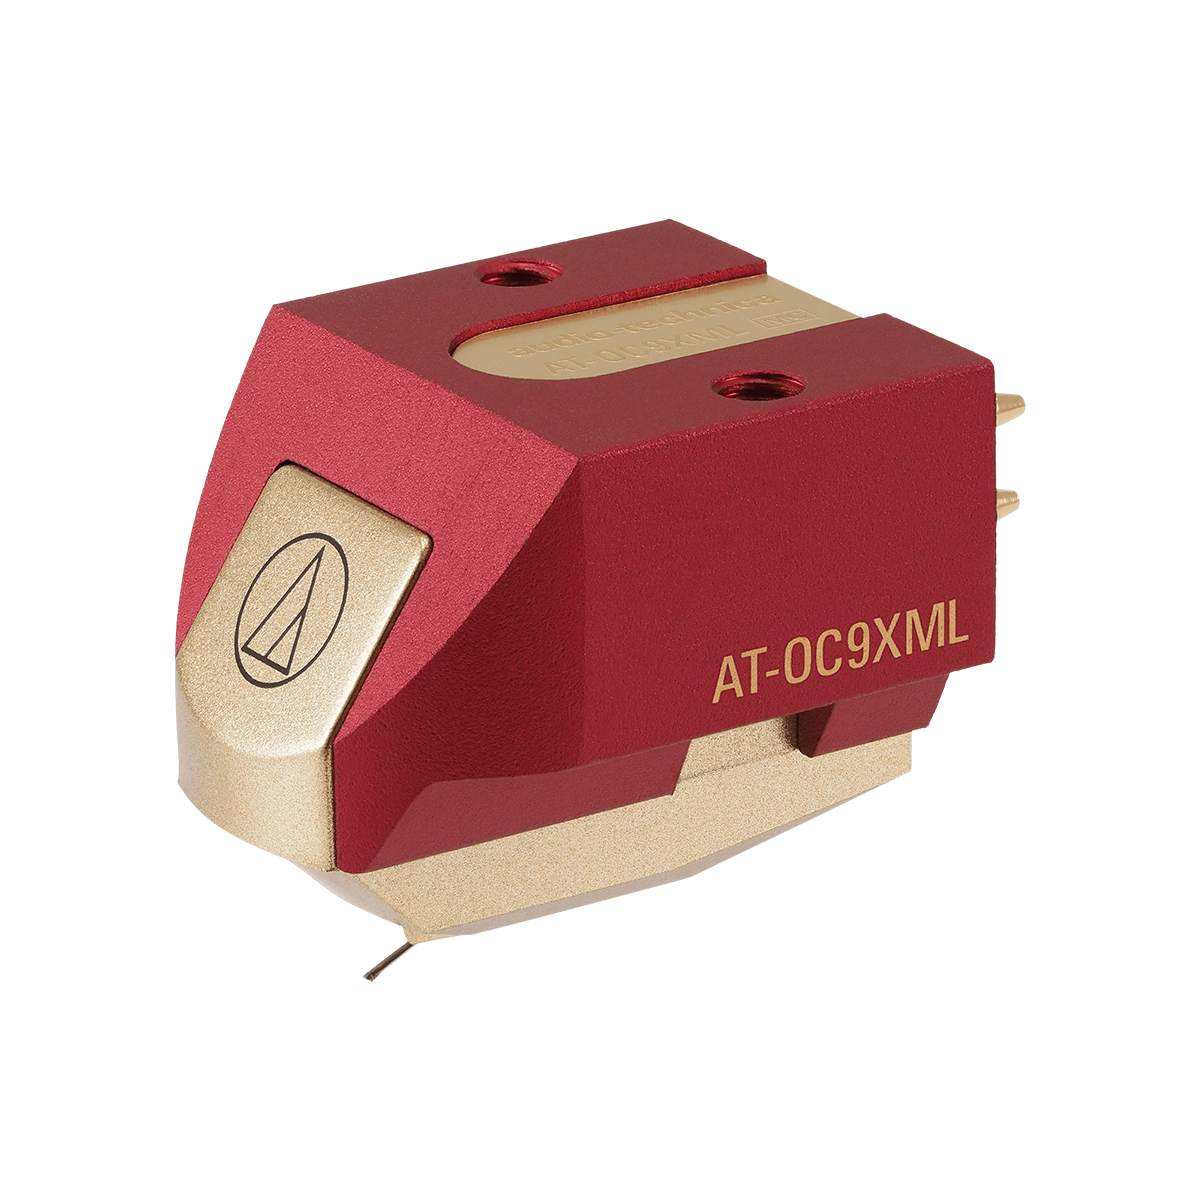 Audio-Technica AT-OC9XML Moving Coil Cartridge